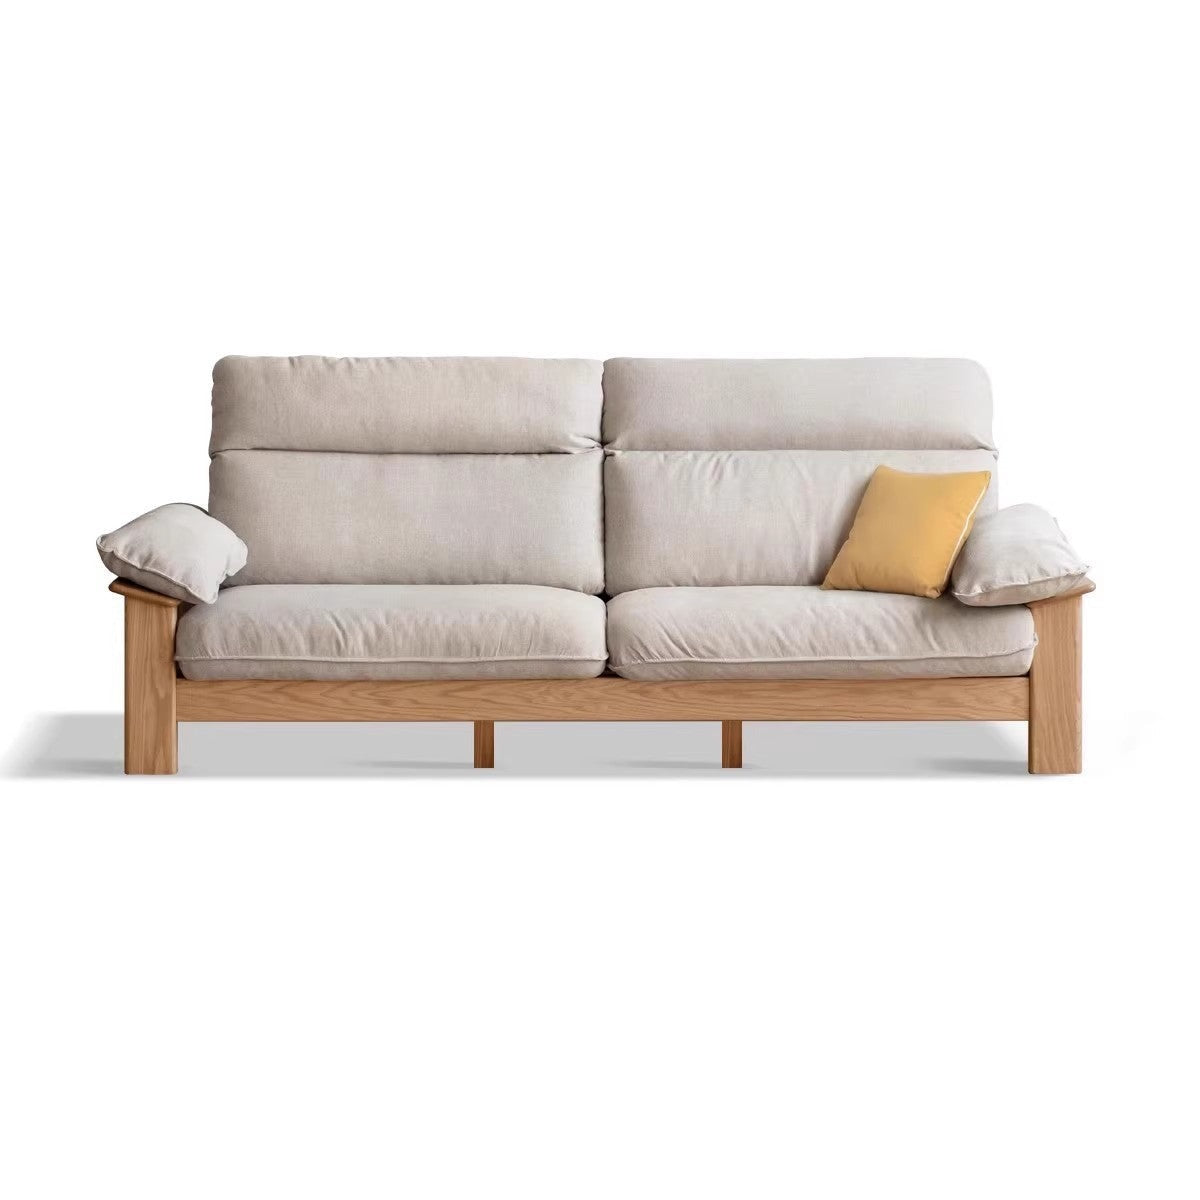 Oak solid Wood Fabric Sofa adjustable backrest"